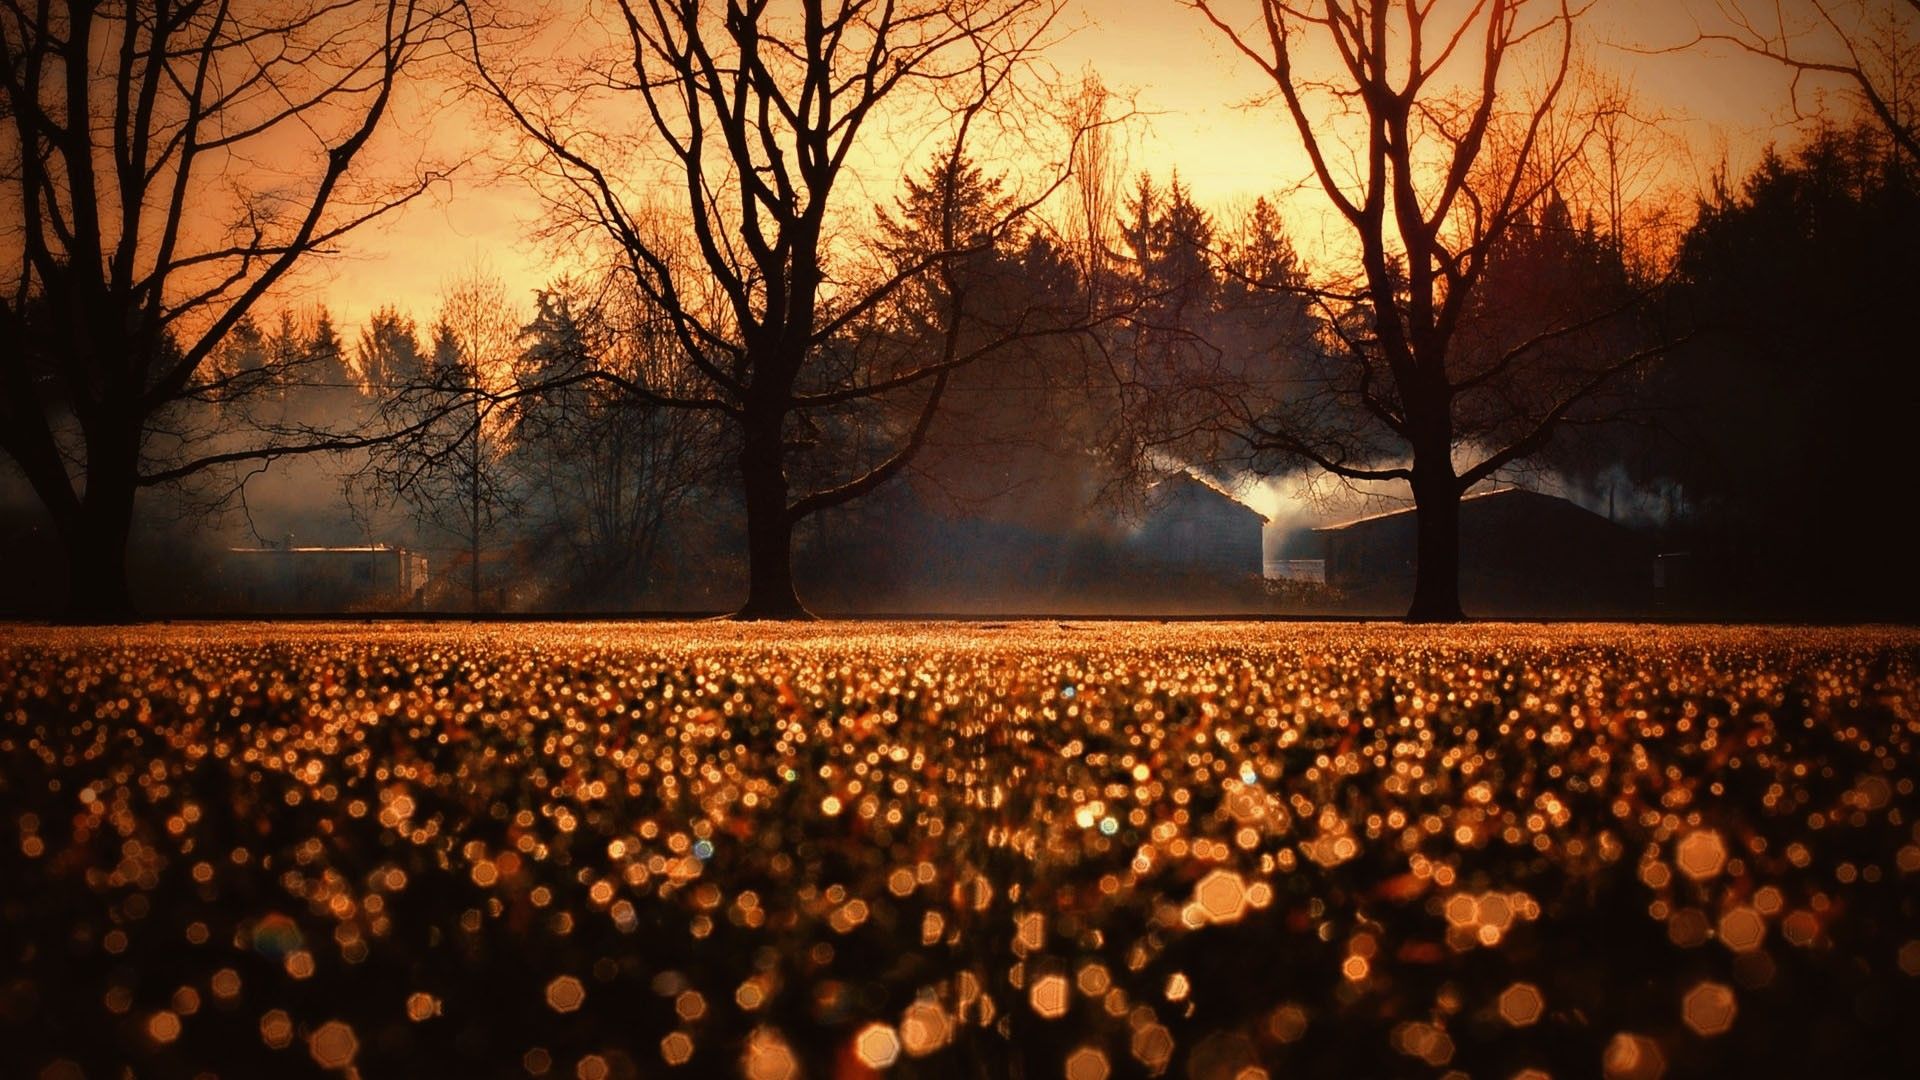 Morning Sunrise In Fall Wallpaper HD FREE HD WALLPAPERS